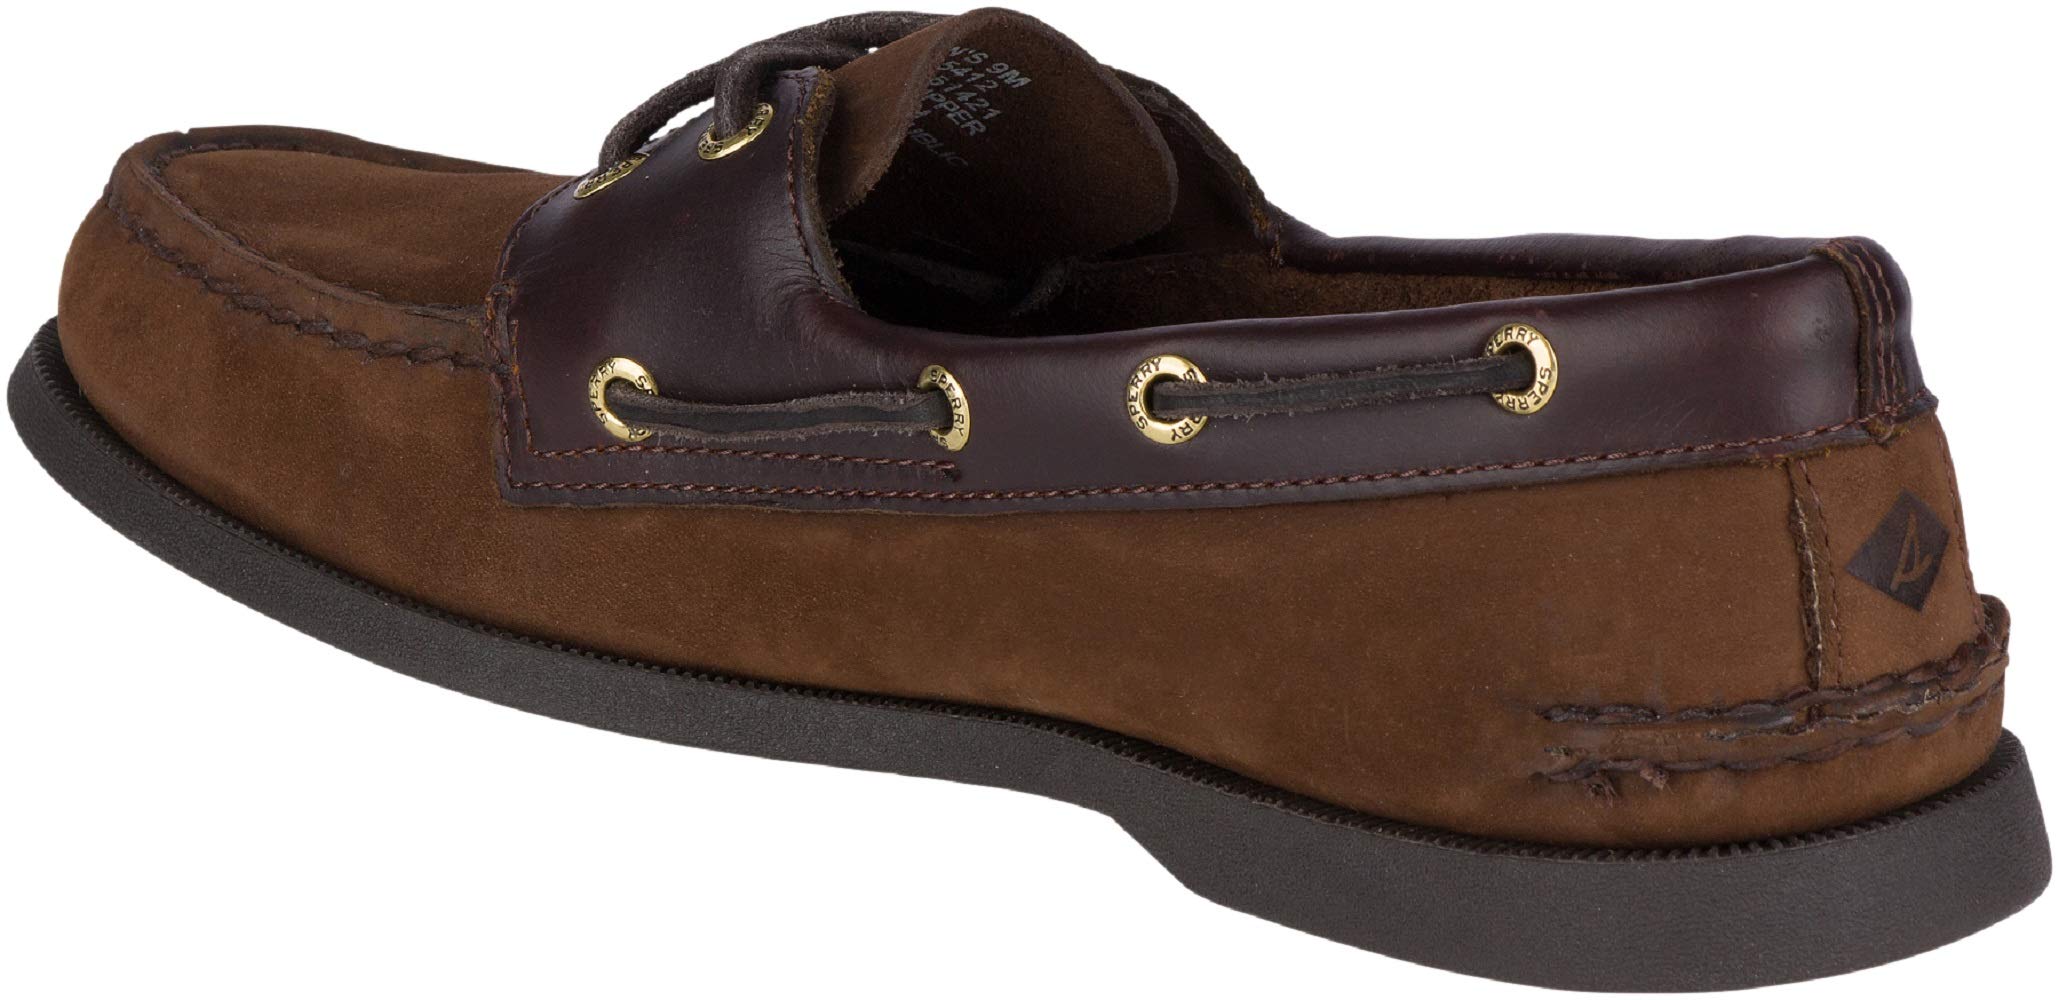 Sperry Men's Authentic Original 2-Eye Boat Shoe, Brown/Buc Brown, 9.5 M US